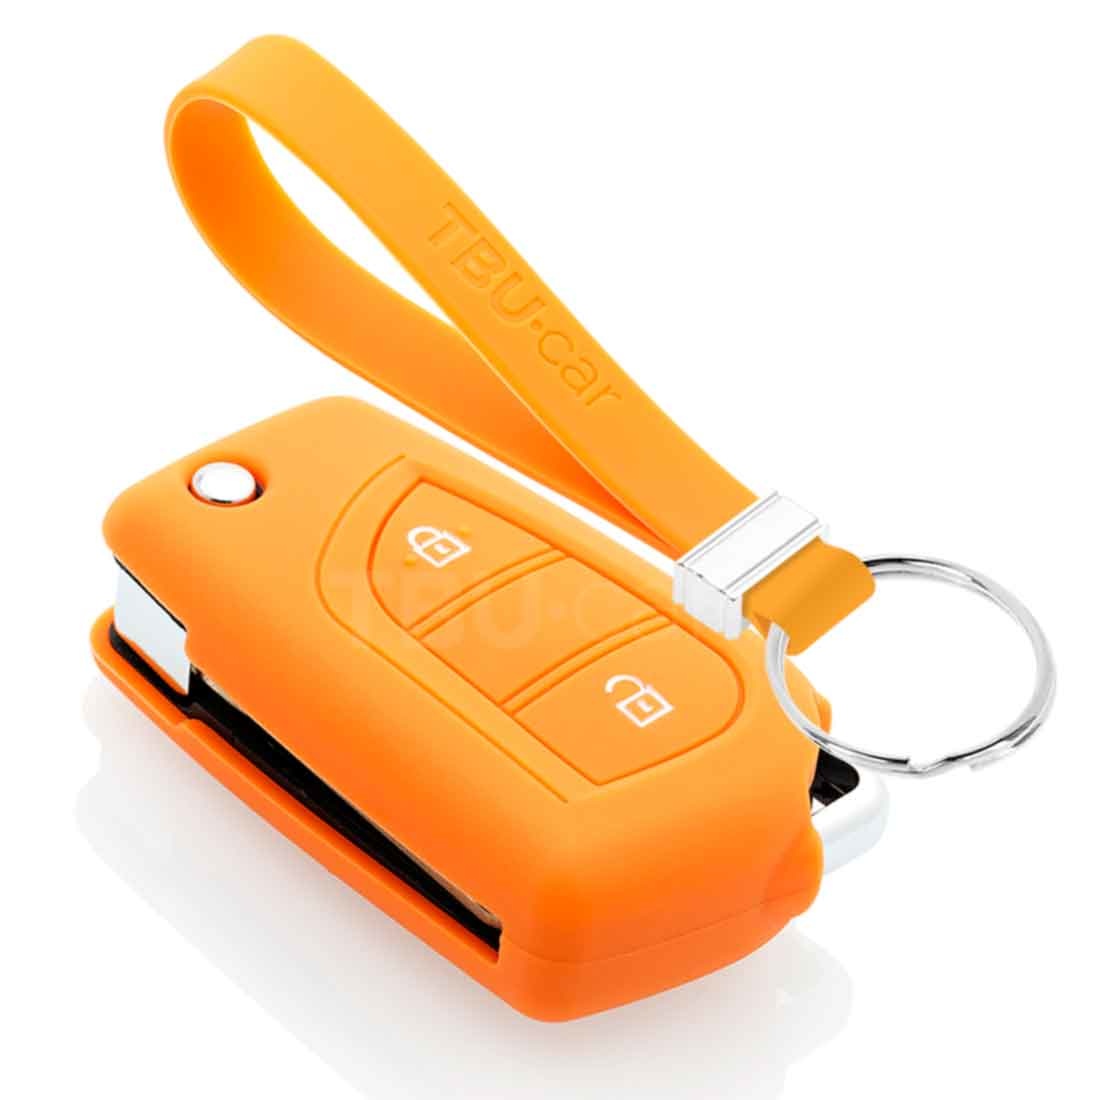 TBU car TBU car Autoschlüssel Hülle kompatibel mit Peugeot 2 Tasten - Schutzhülle aus Silikon - Auto Schlüsselhülle Cover in Orange